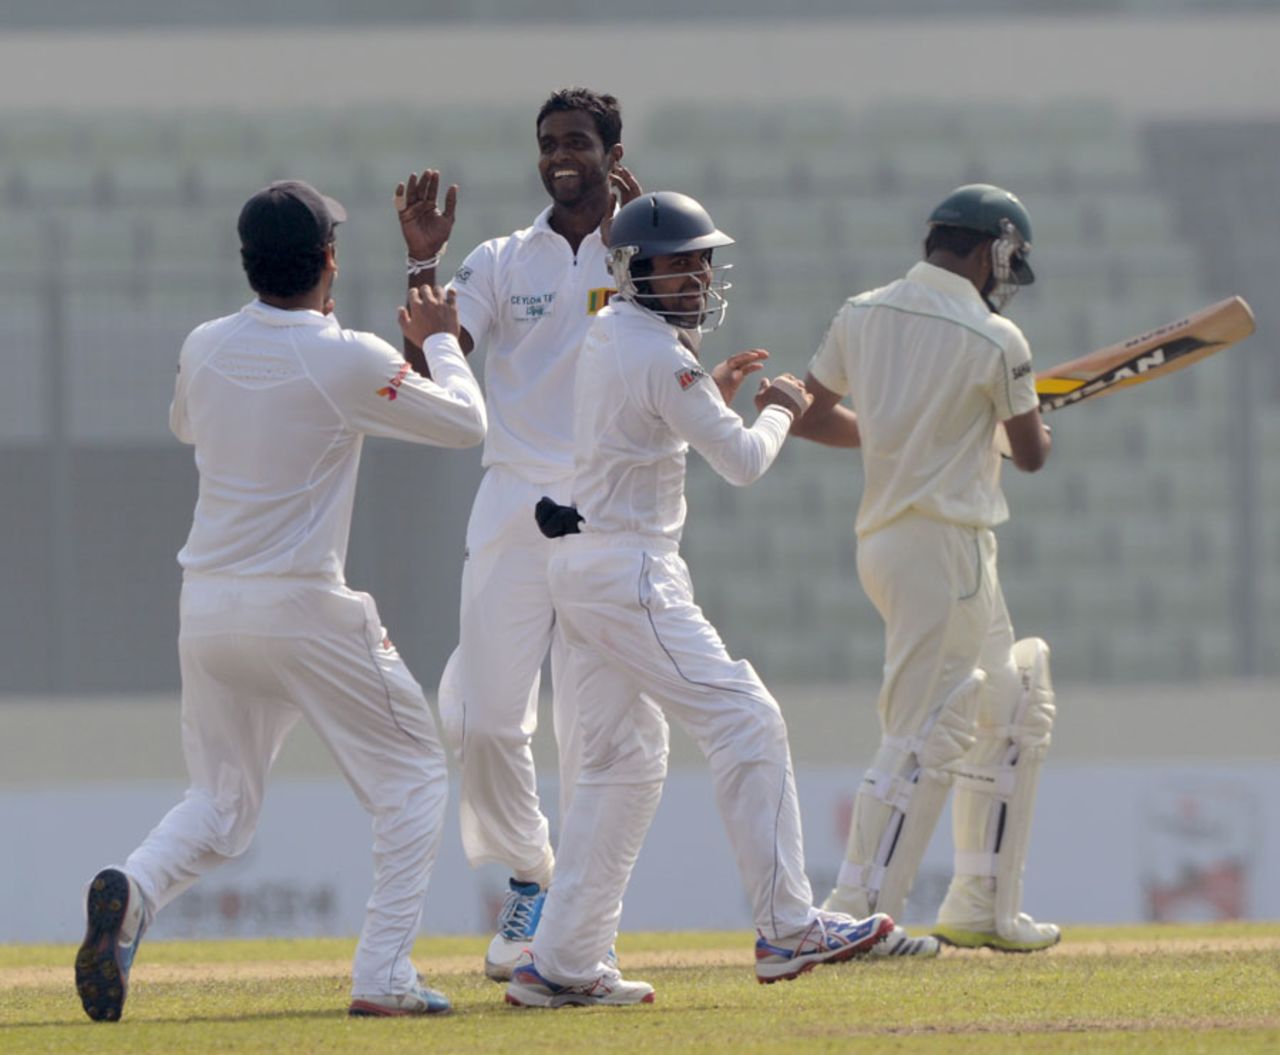 Shaminda Eranga is congratulated after taking a wicket, Bangladesh v Sri Lanka, 1st Test, Mirpur, 1st day, January 27, 2014